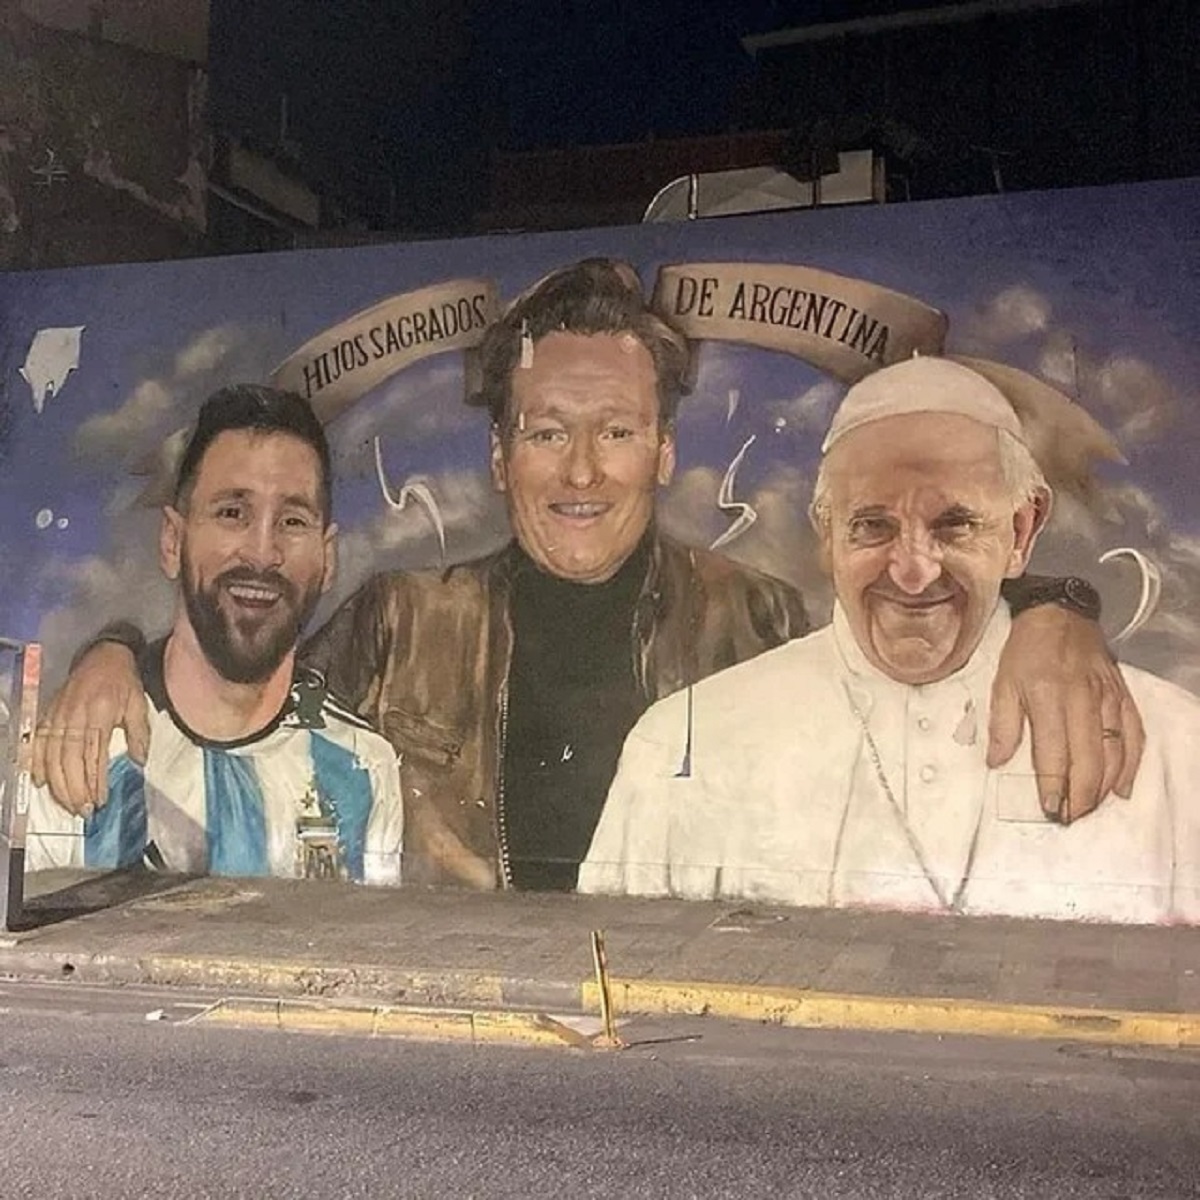 conan o brien argentina mural